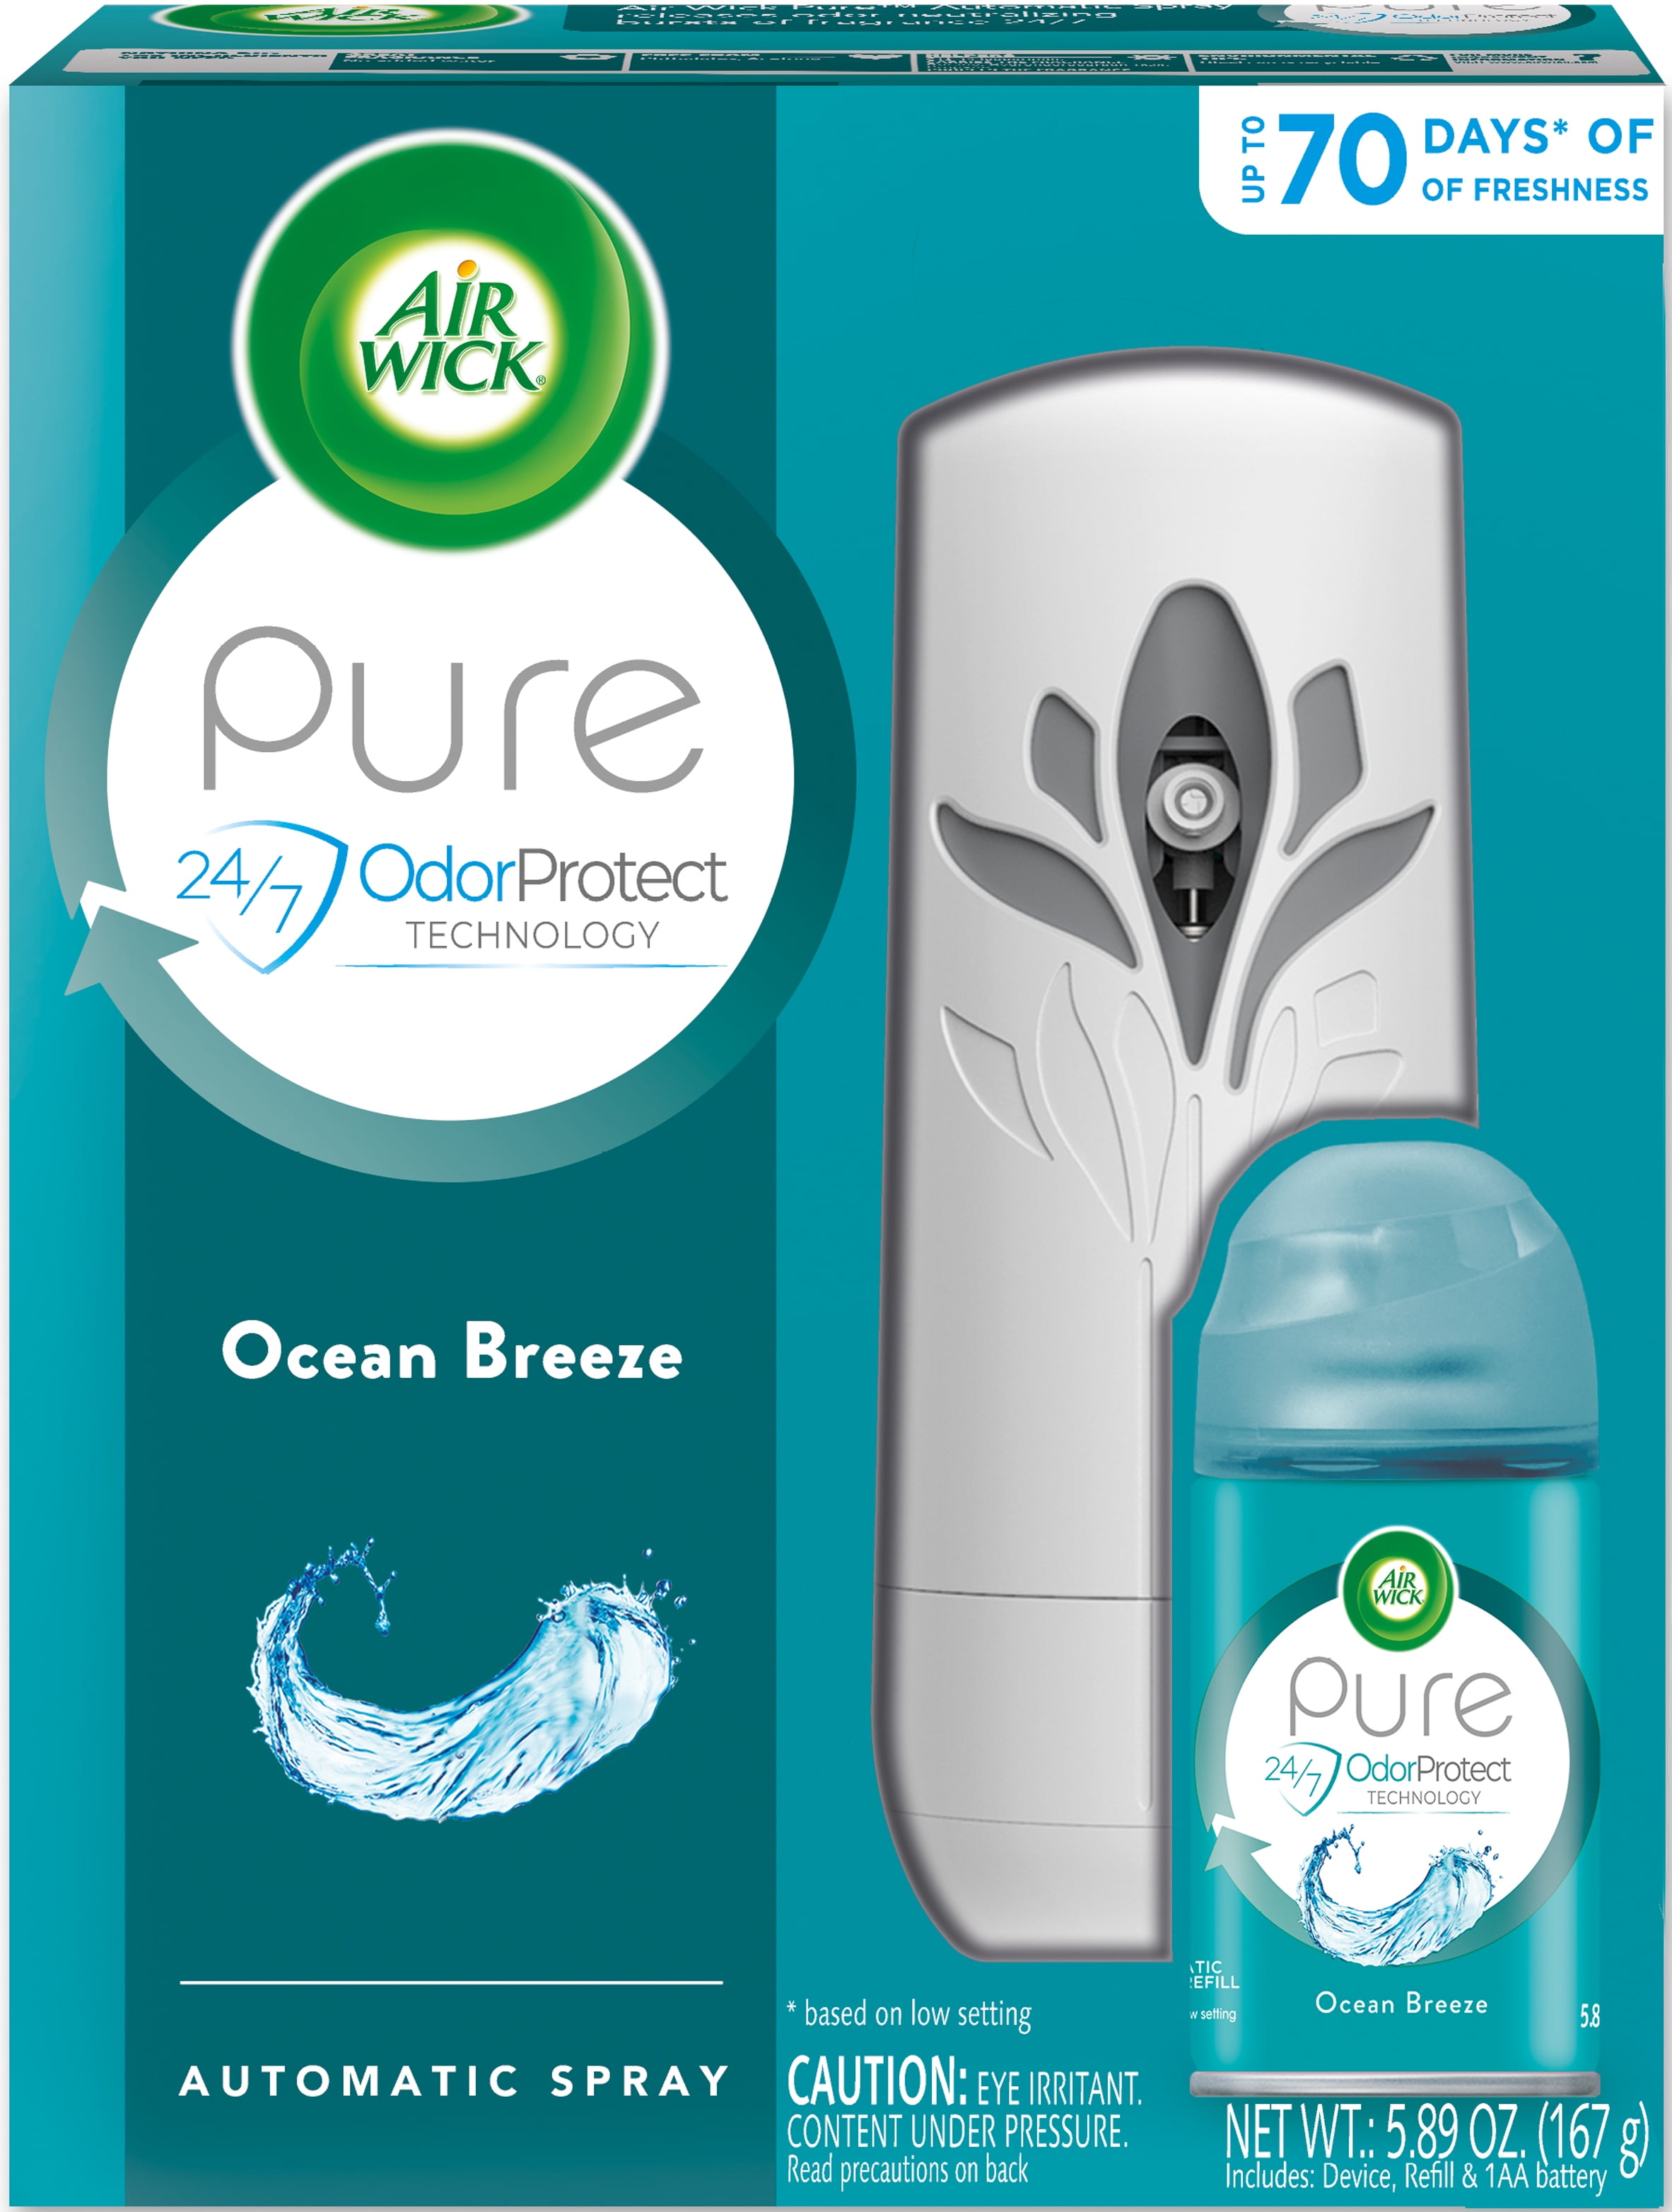 Air Wick Pure Automatic Air Freshener Spray Kit, Gadget+Refill, Ocean Breeze